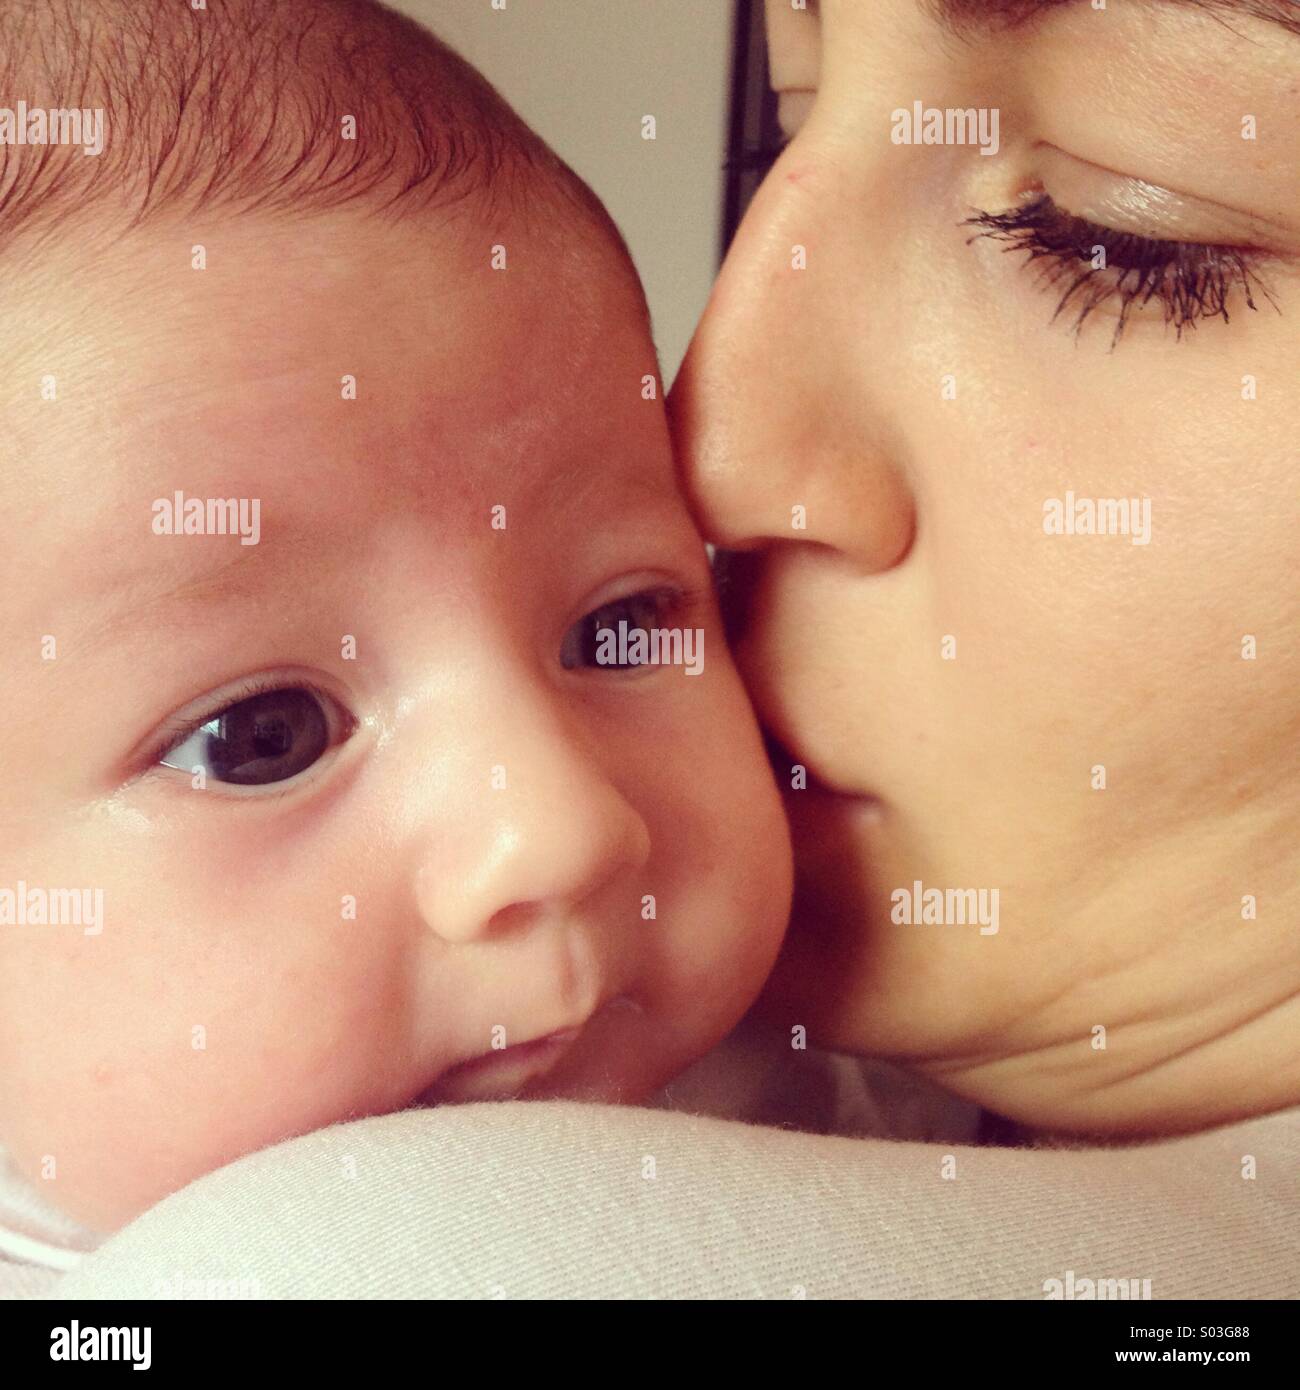 Newborn baby and mother Stock Photo